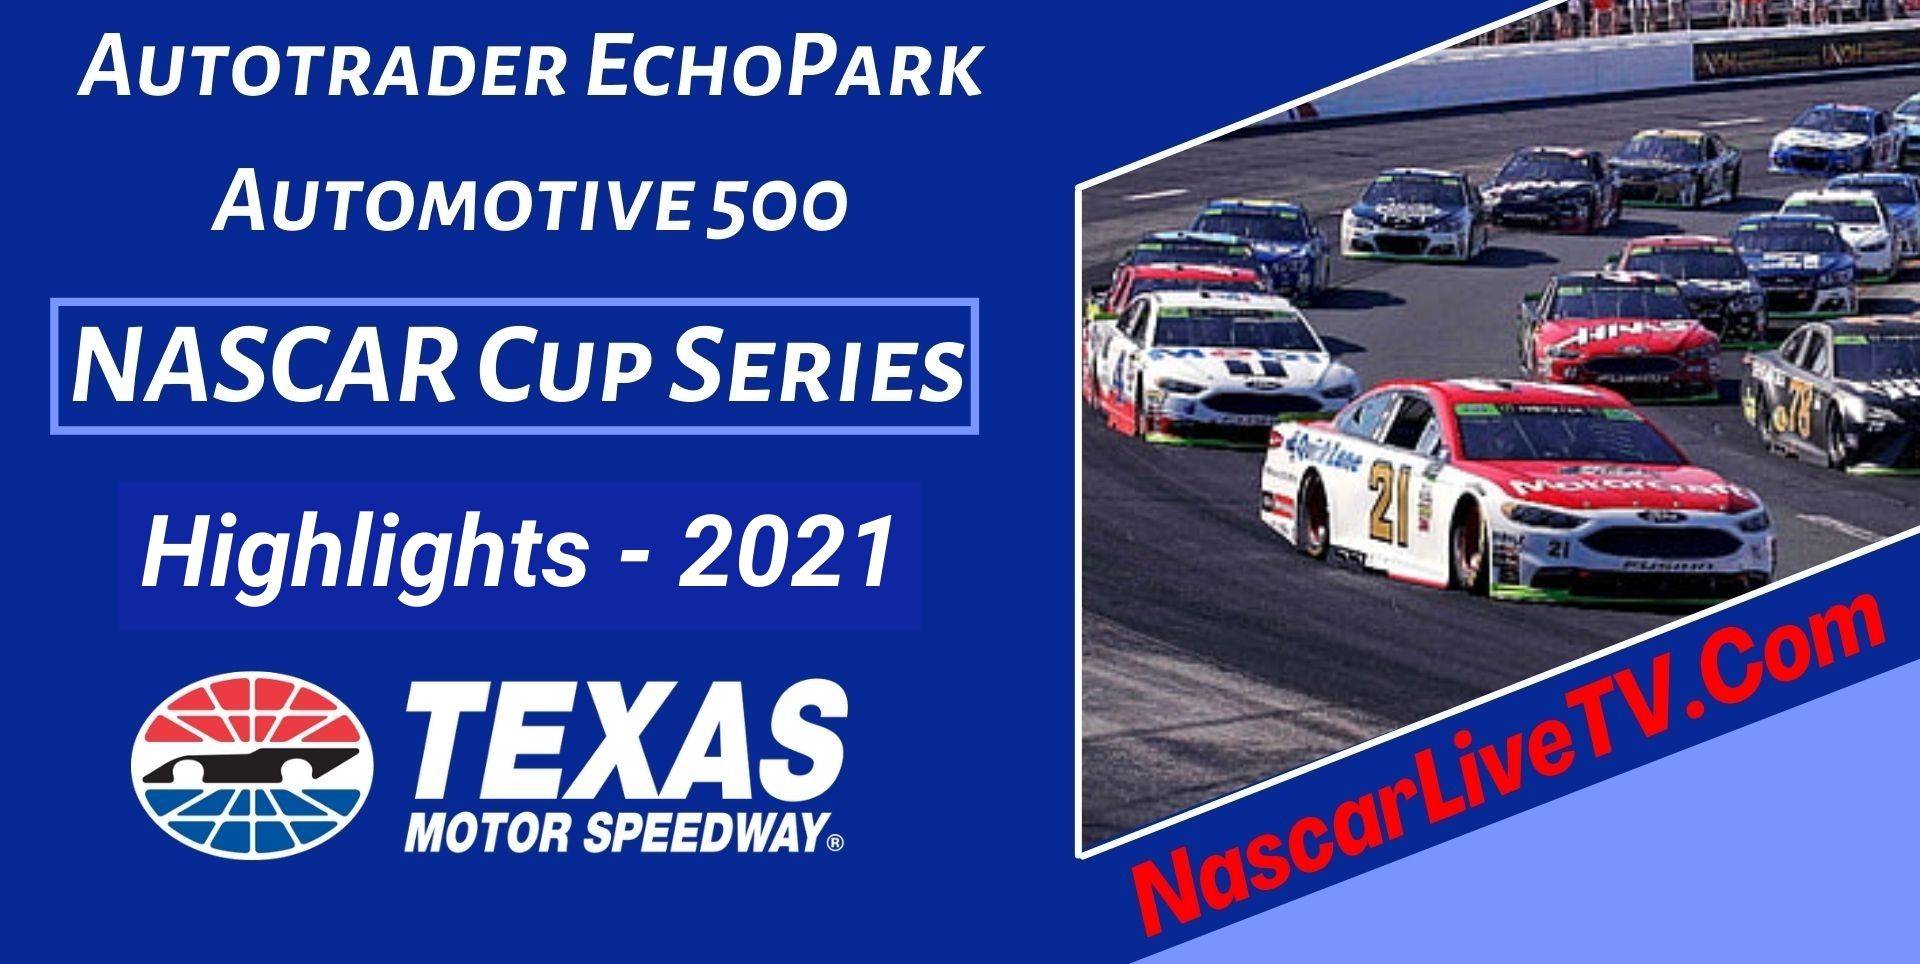 Autotrader Echopark Automotive 500 Highlights NASCAR Cup 2021